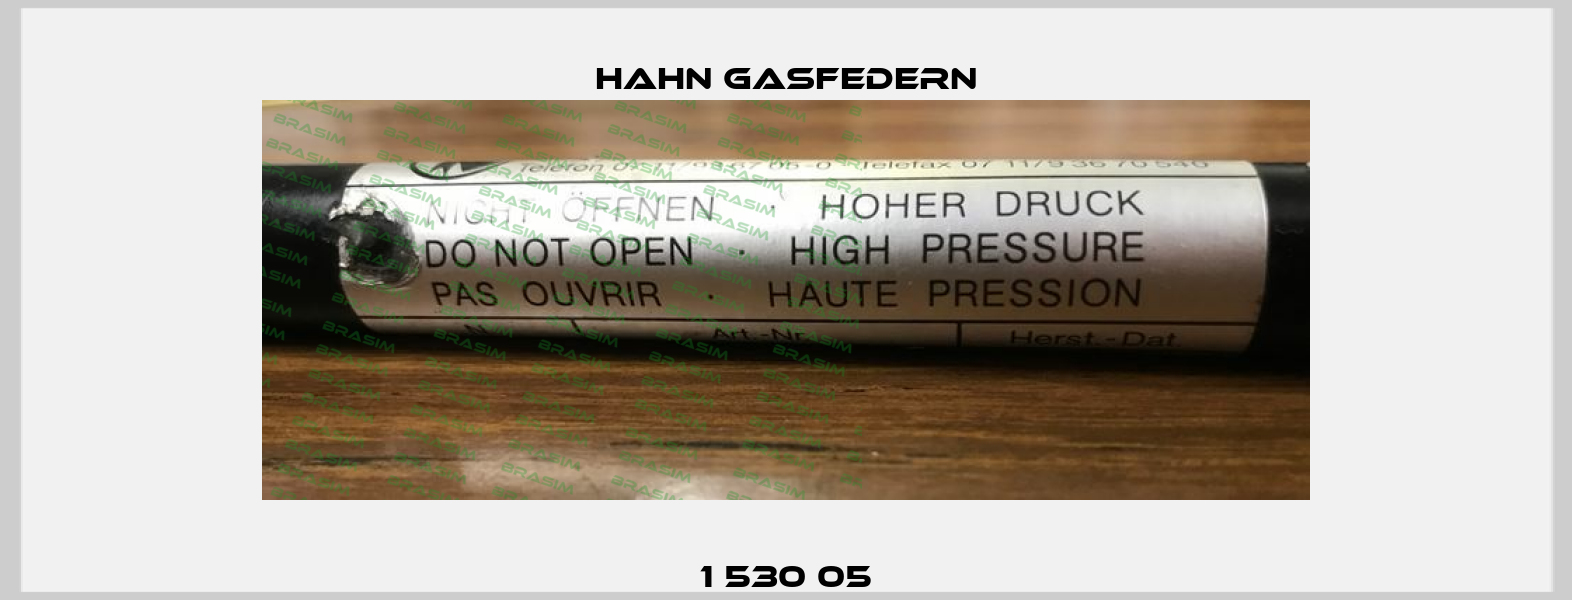 1 530 05 Hahn Gasfedern